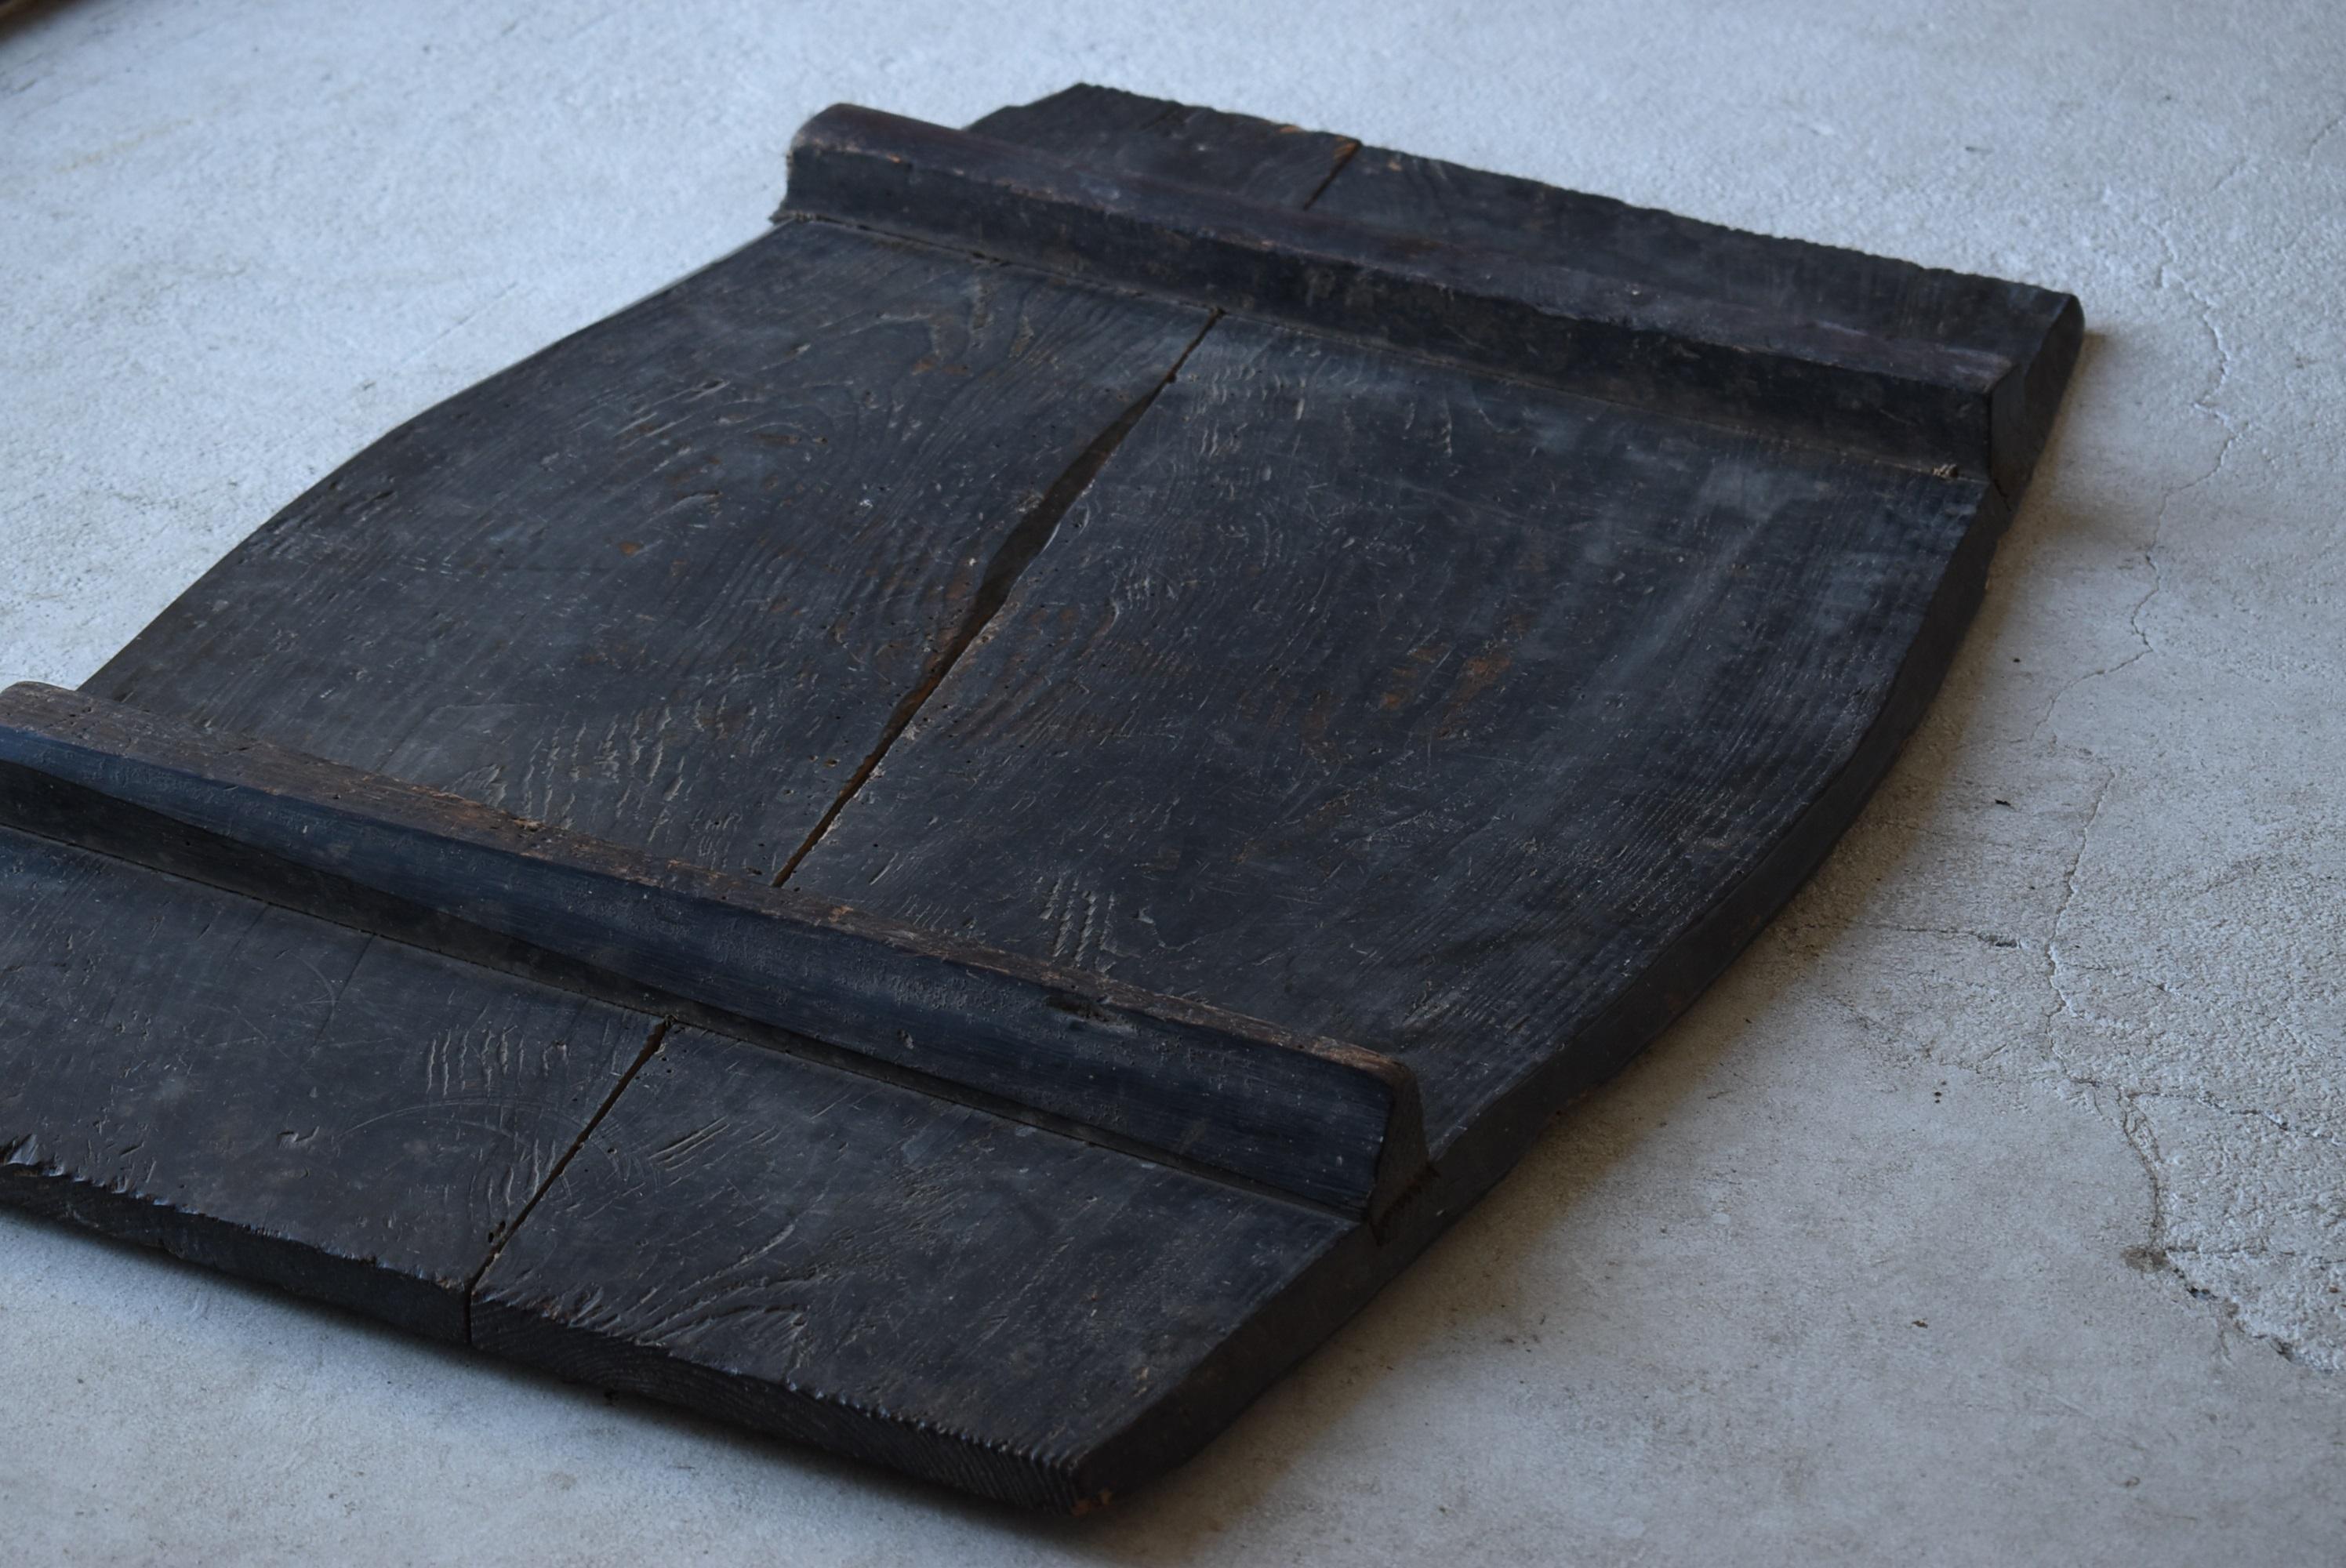 Japanese Antique Black Wooden Board 1800s-1900s/Abstract Art Wabisabi Art 1